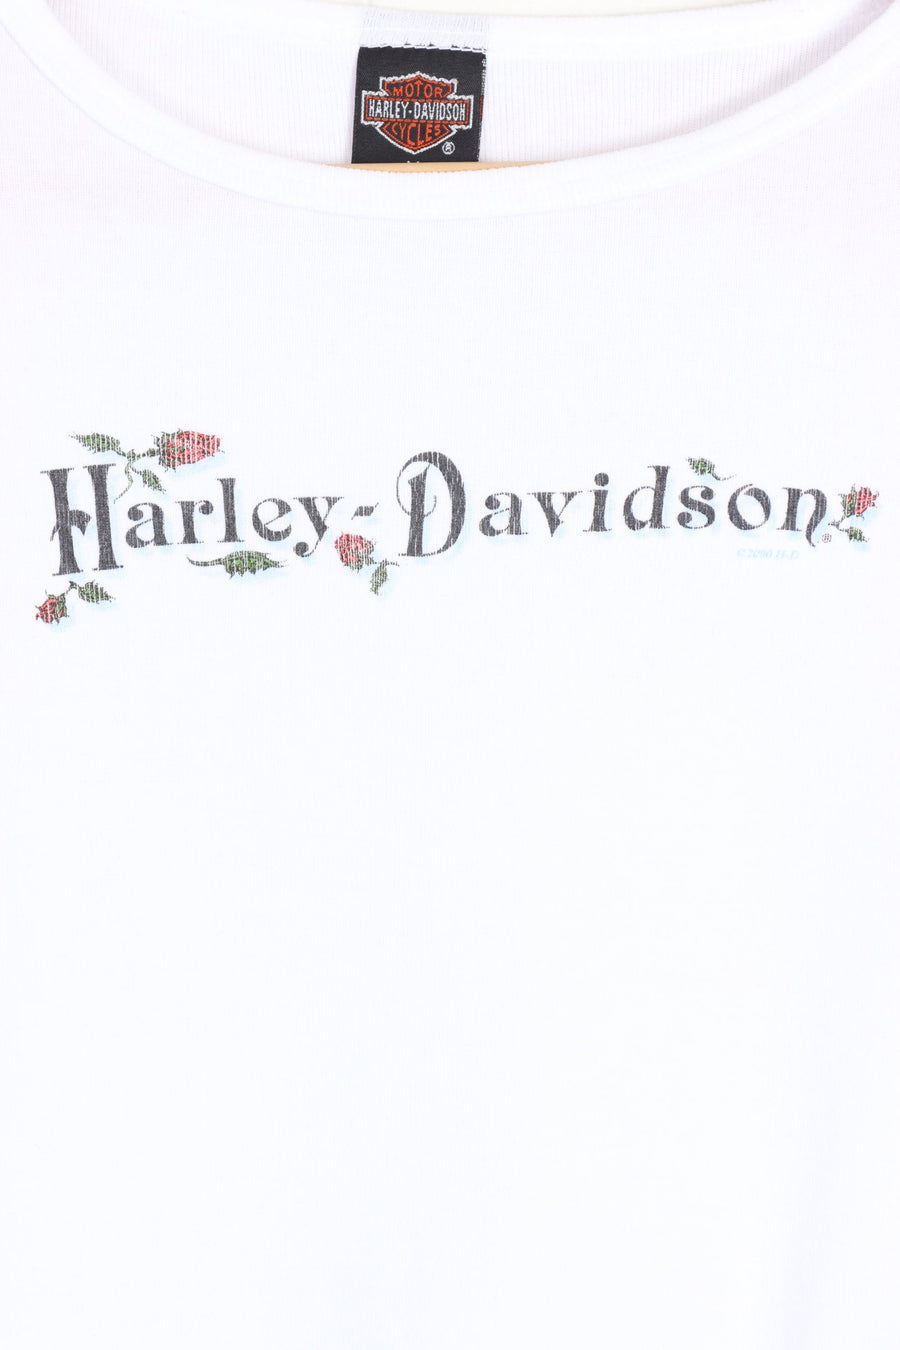 HARLEY DAVISON Roses Frill Sleeve USA Made Baby Tee (Women's S)